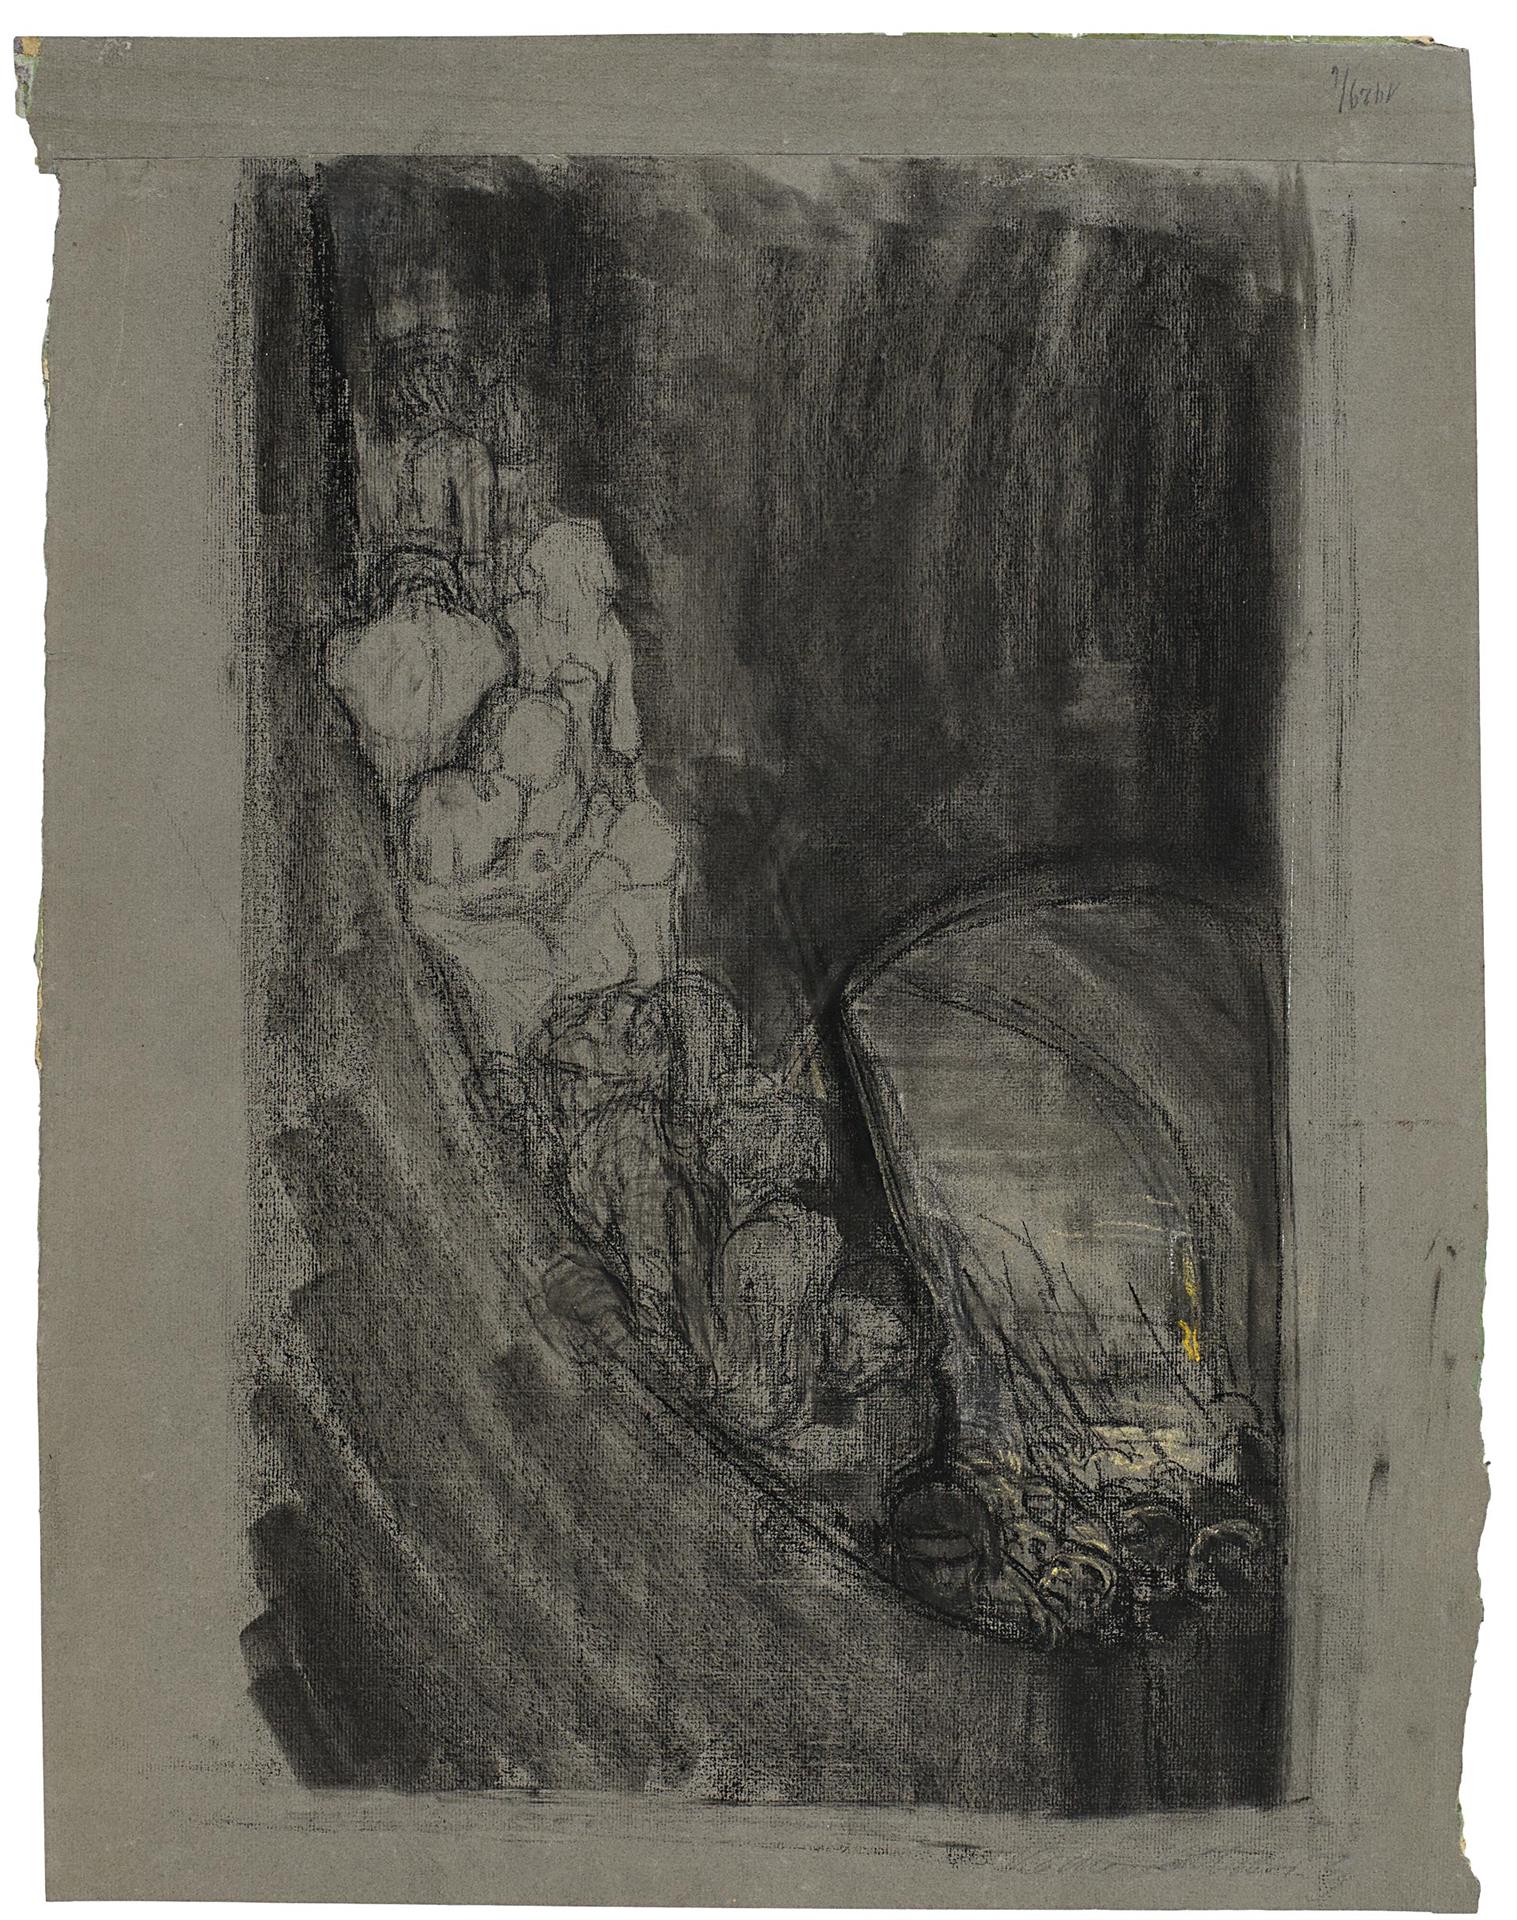 Käthe Kollwitz, Arming in a Vault, c 1906, charcoal, blotted, and yellow chalk on dark, grey-green Ingres paper, NT 216, Cologne Kollwitz Collection © Käthe Kollwitz Museum Köln